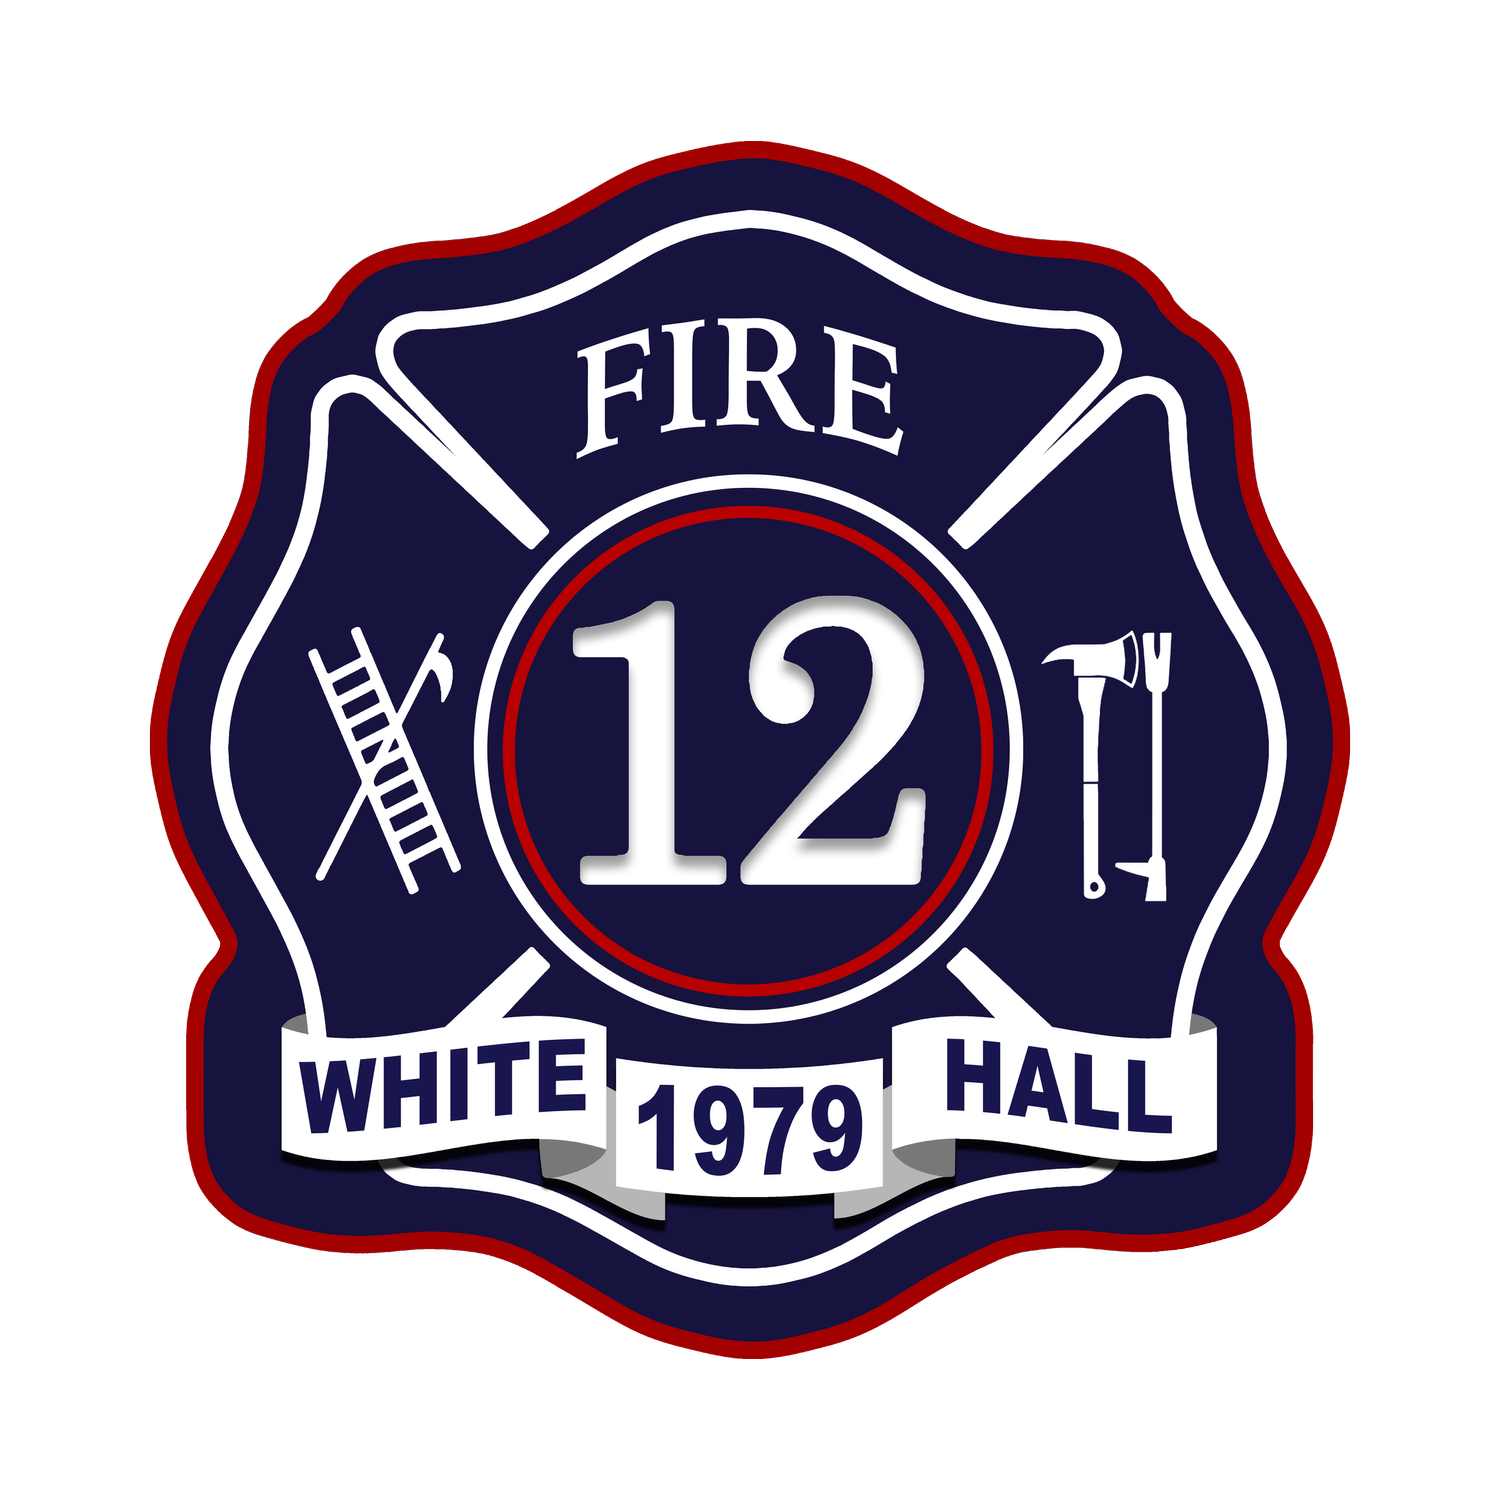 White Hall Volunteer Fire Department